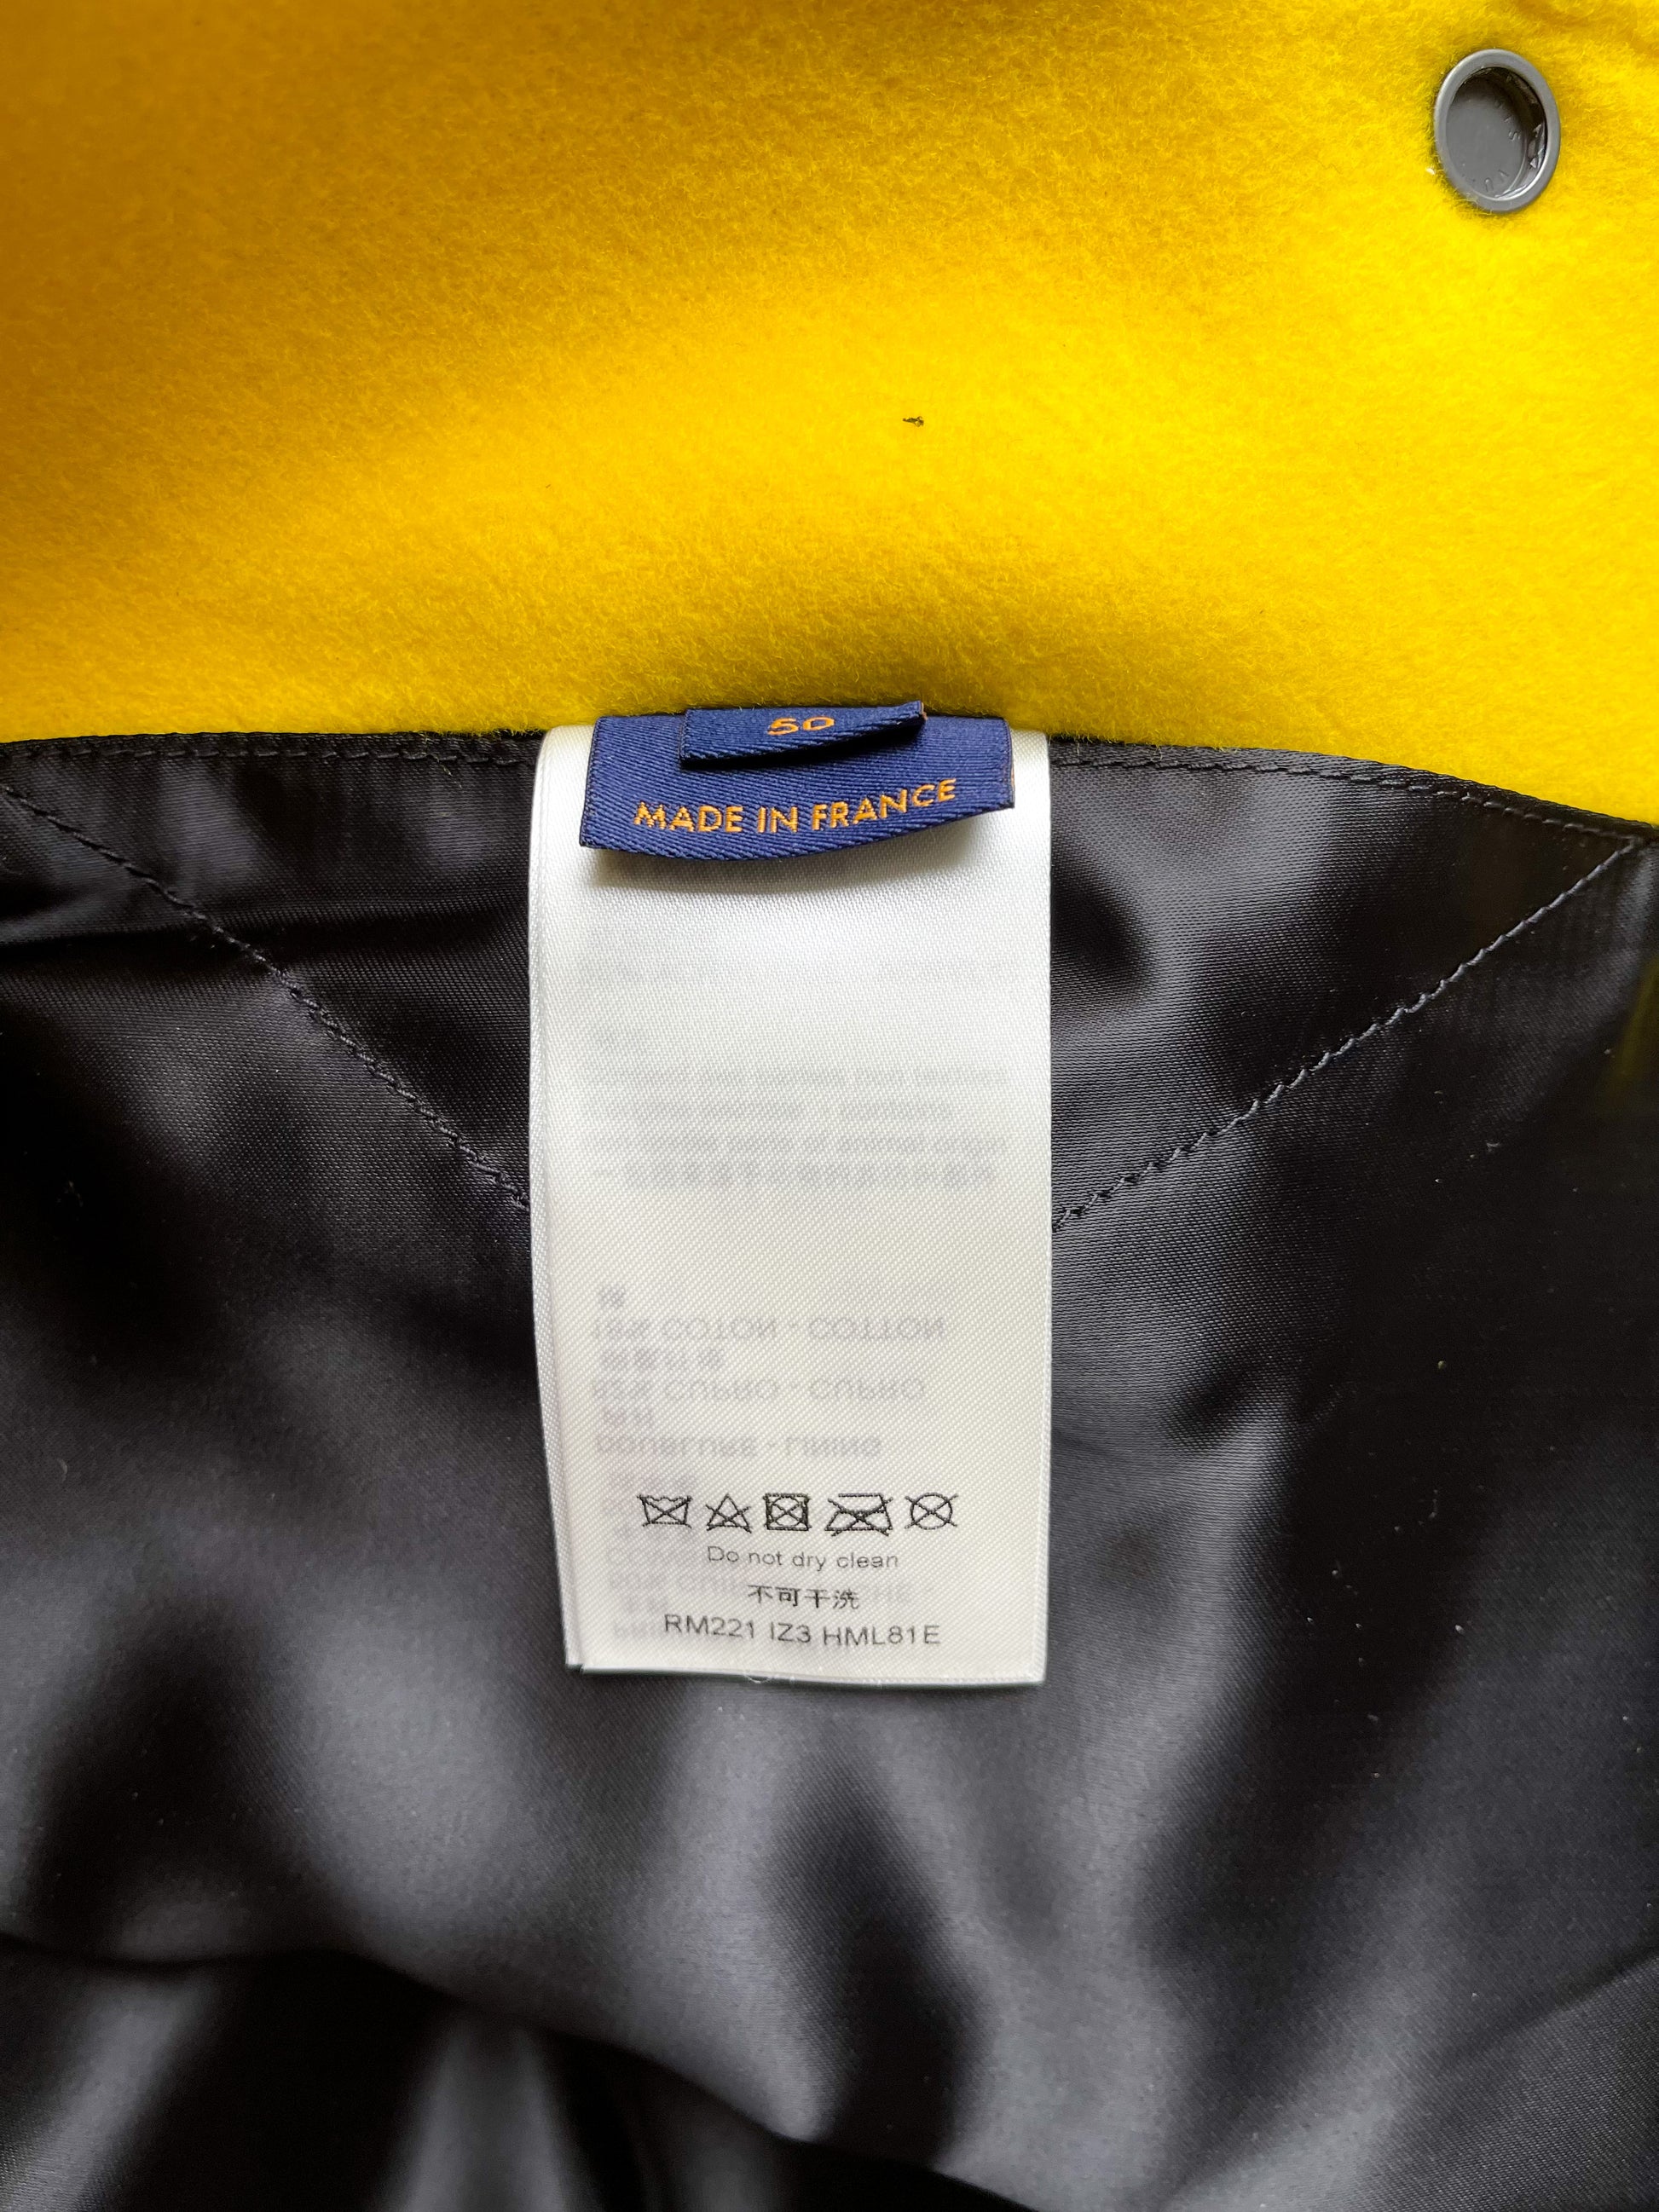 Louis Vuitton Black & Yellow Varsity Jacket